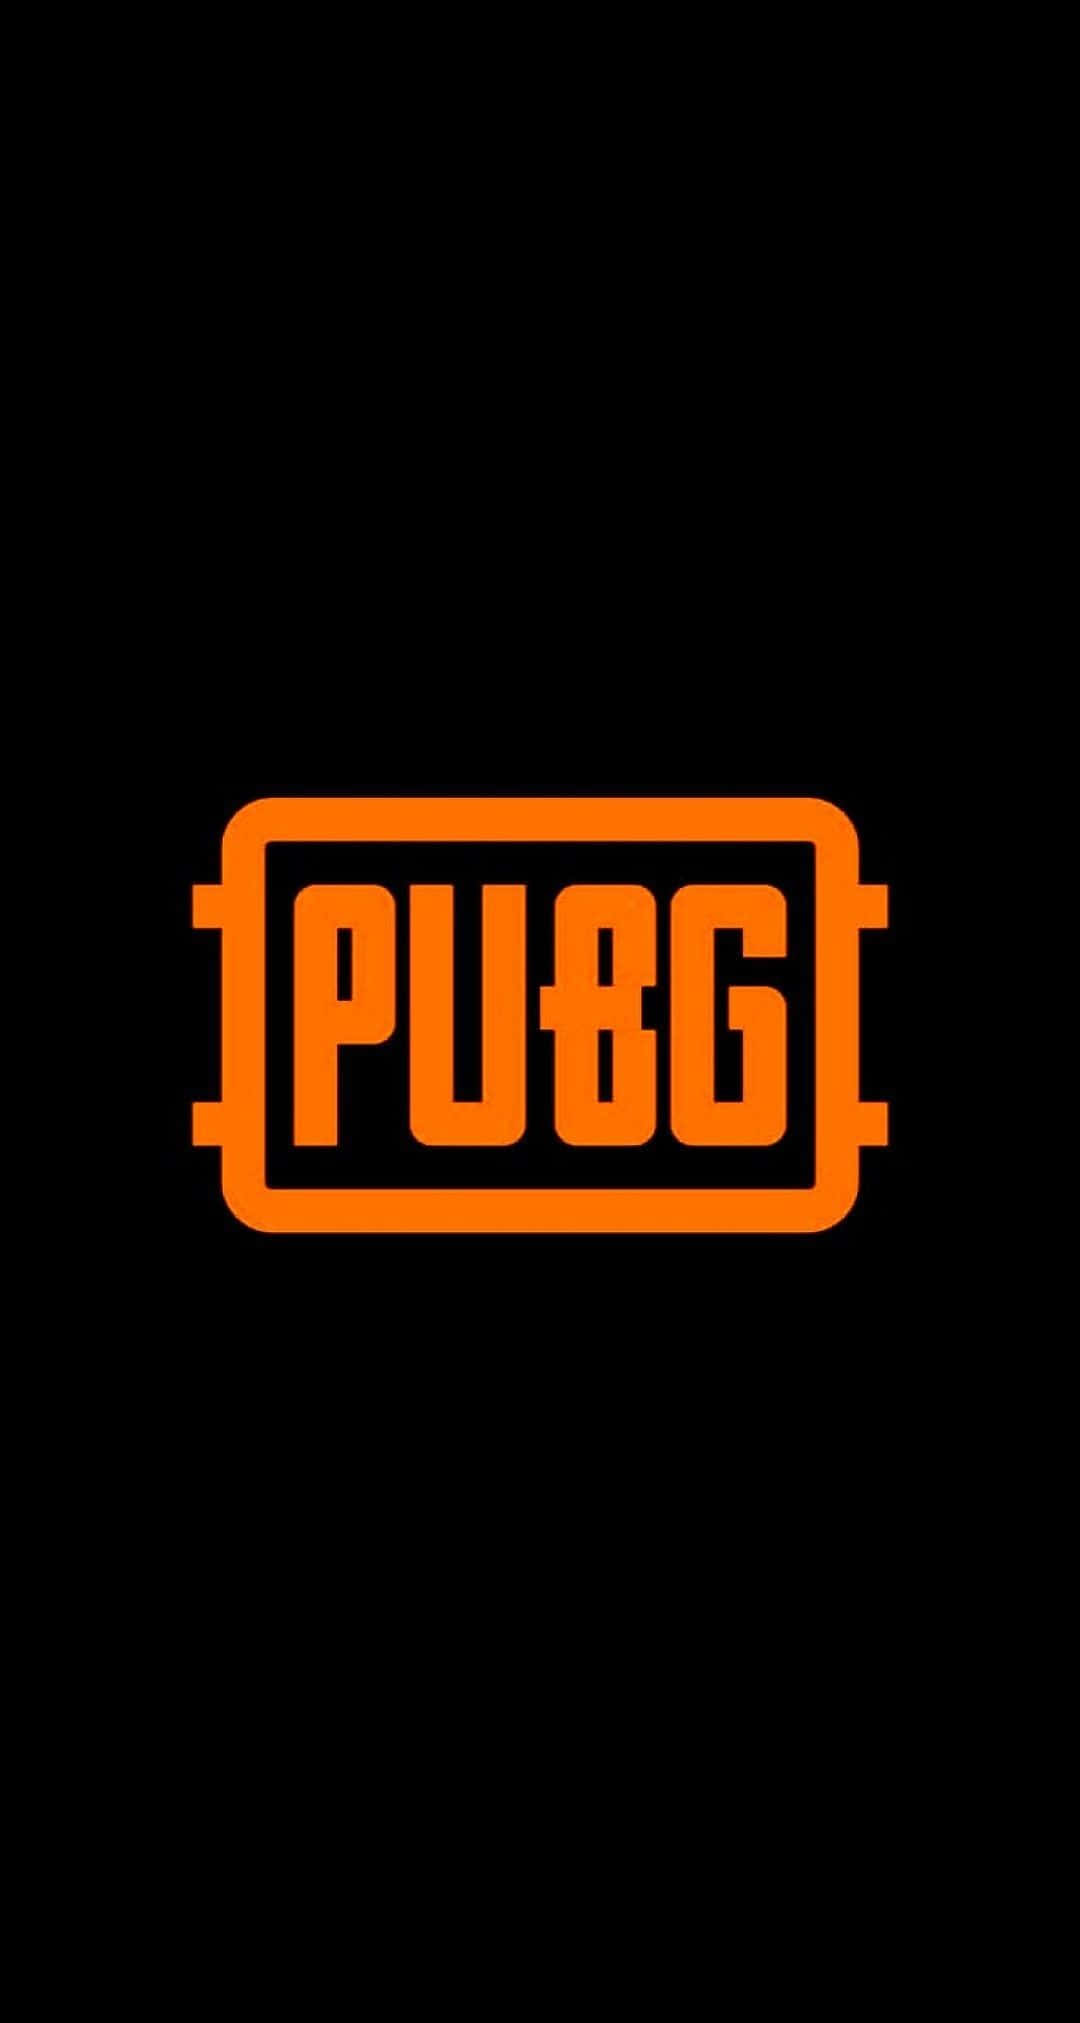 The official PUBG logo